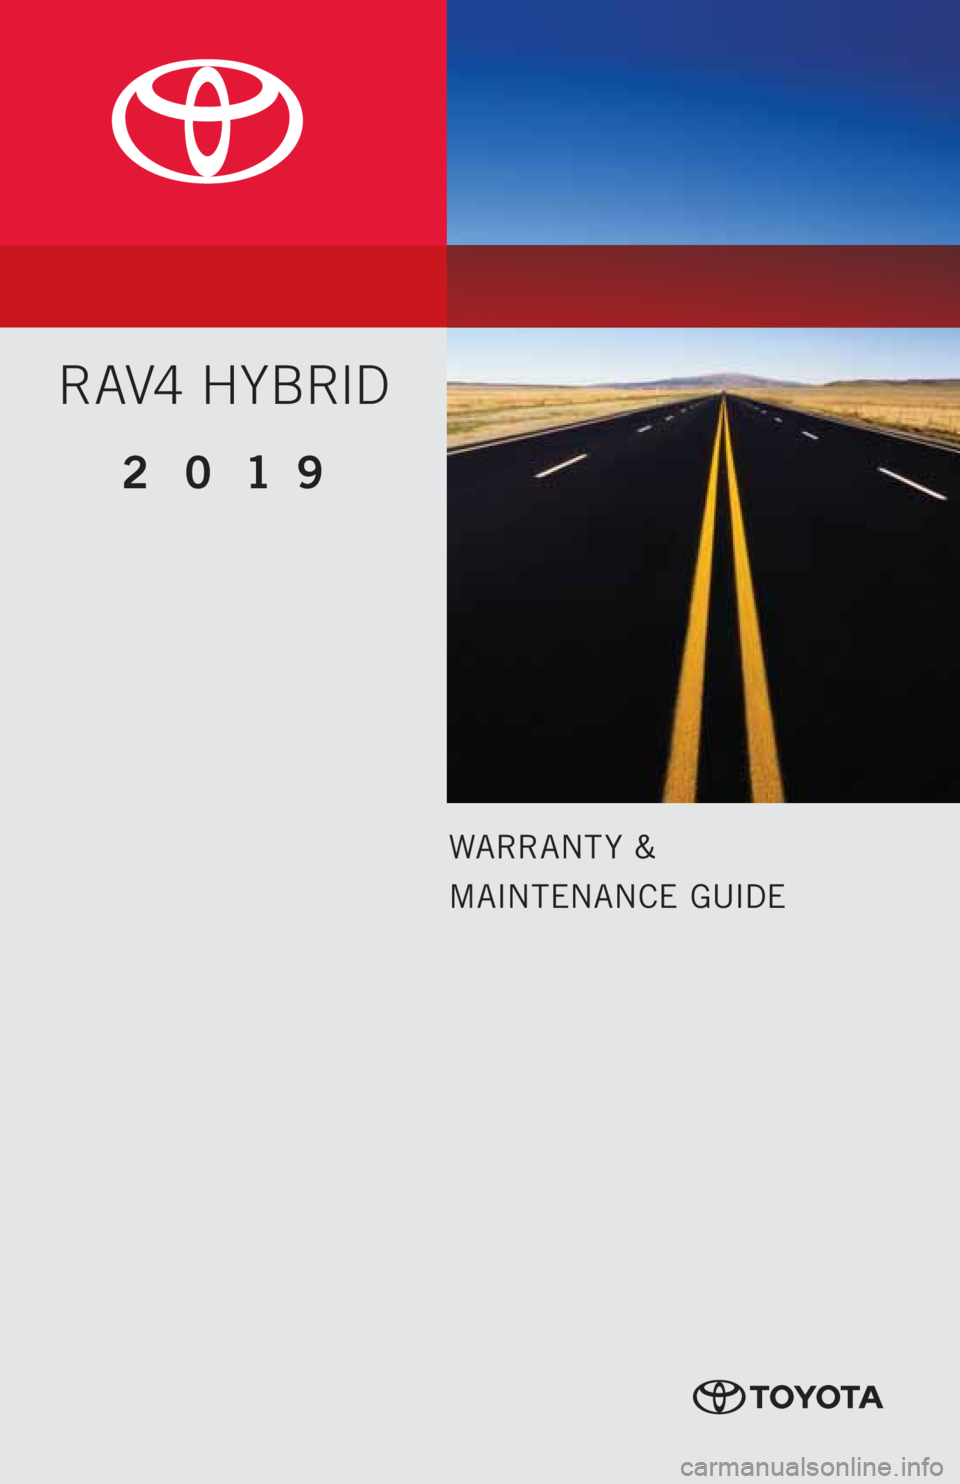 TOYOTA RAV4 HYBRID 2019  Warranties & Maintenance Guides (in English) WARRANT Y &
MAINTENANCE GUIDE
RAV4 HYBRID
2019      